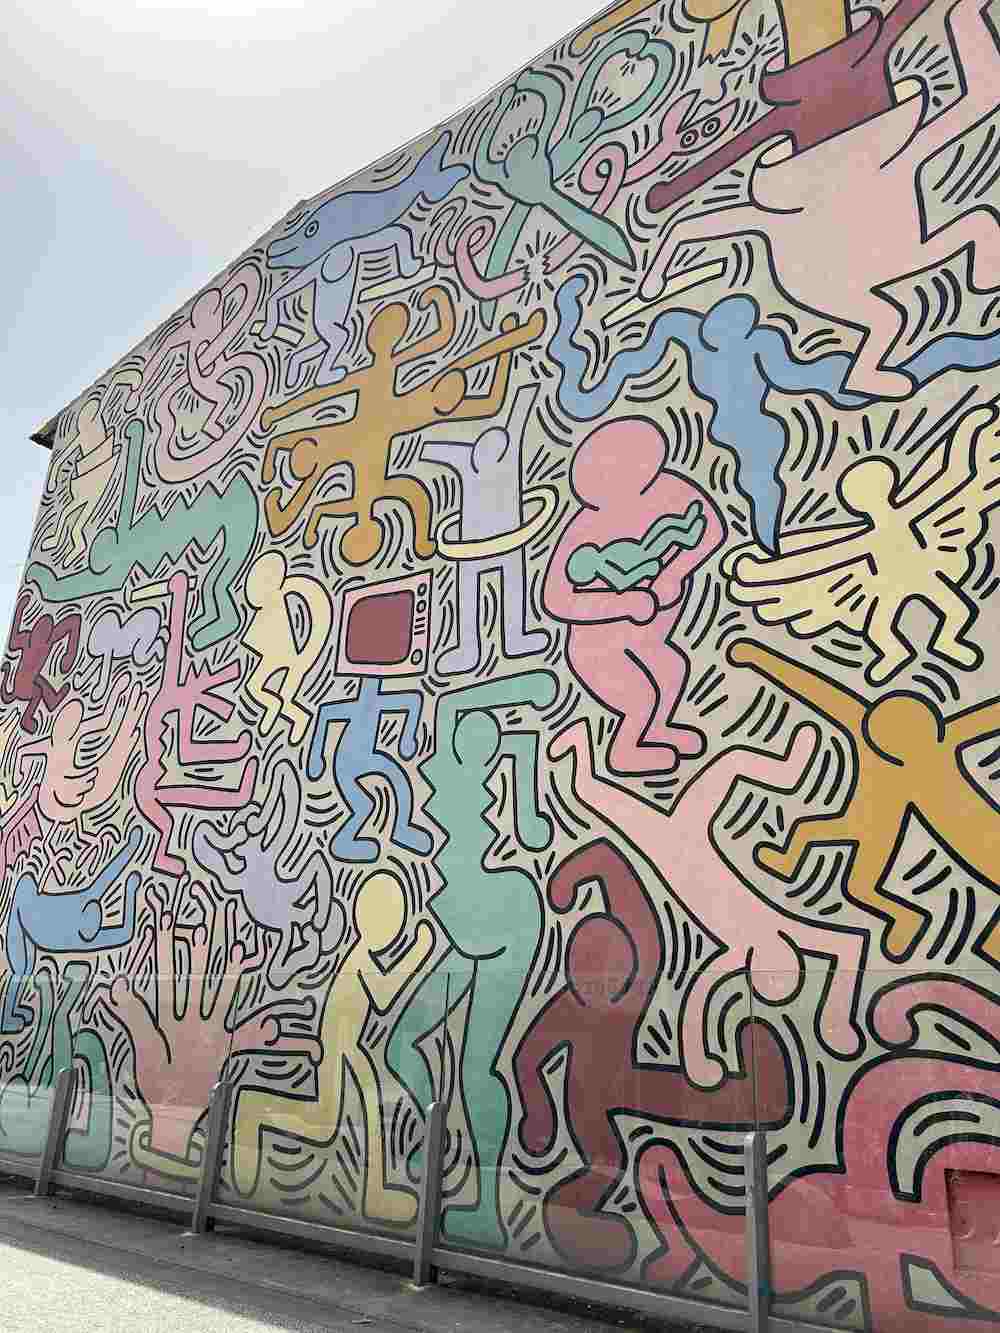 Keith Haring Tuttomondo mural in Pisa